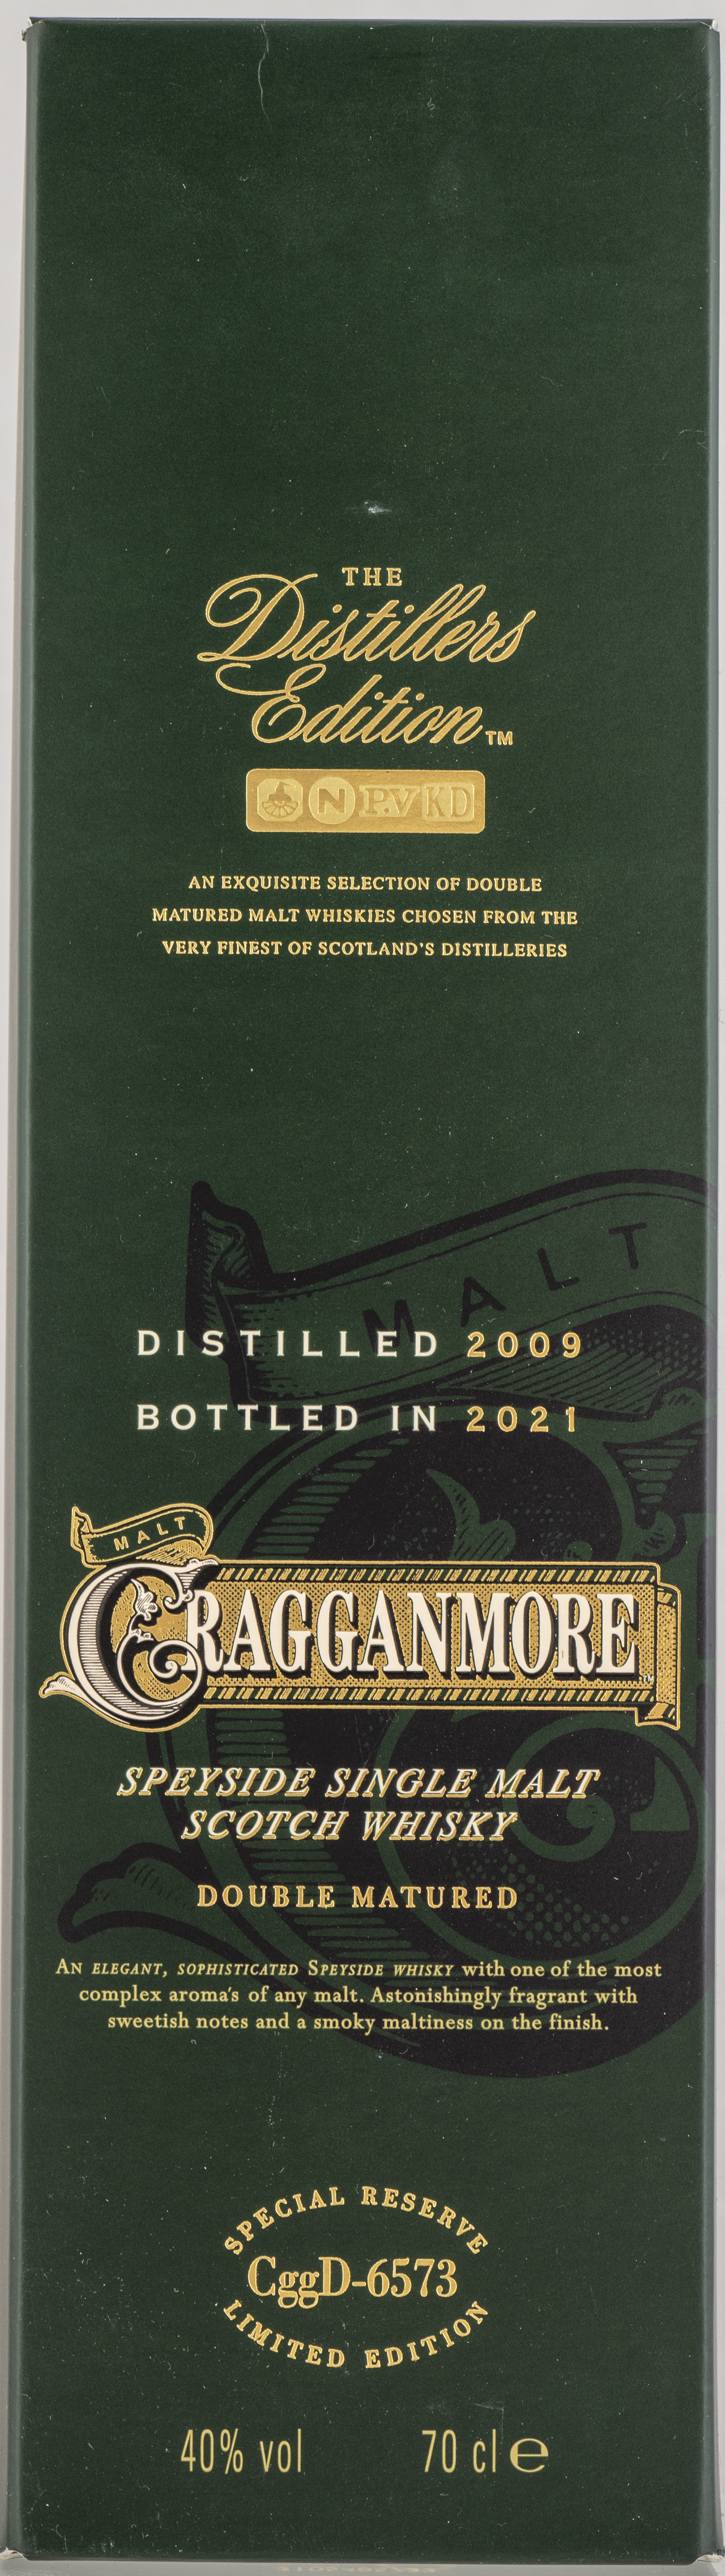 Billede: PHC_7308 - Cragganmore Distillers Edition 2009-2021 CggD-6573 - box front.jpg